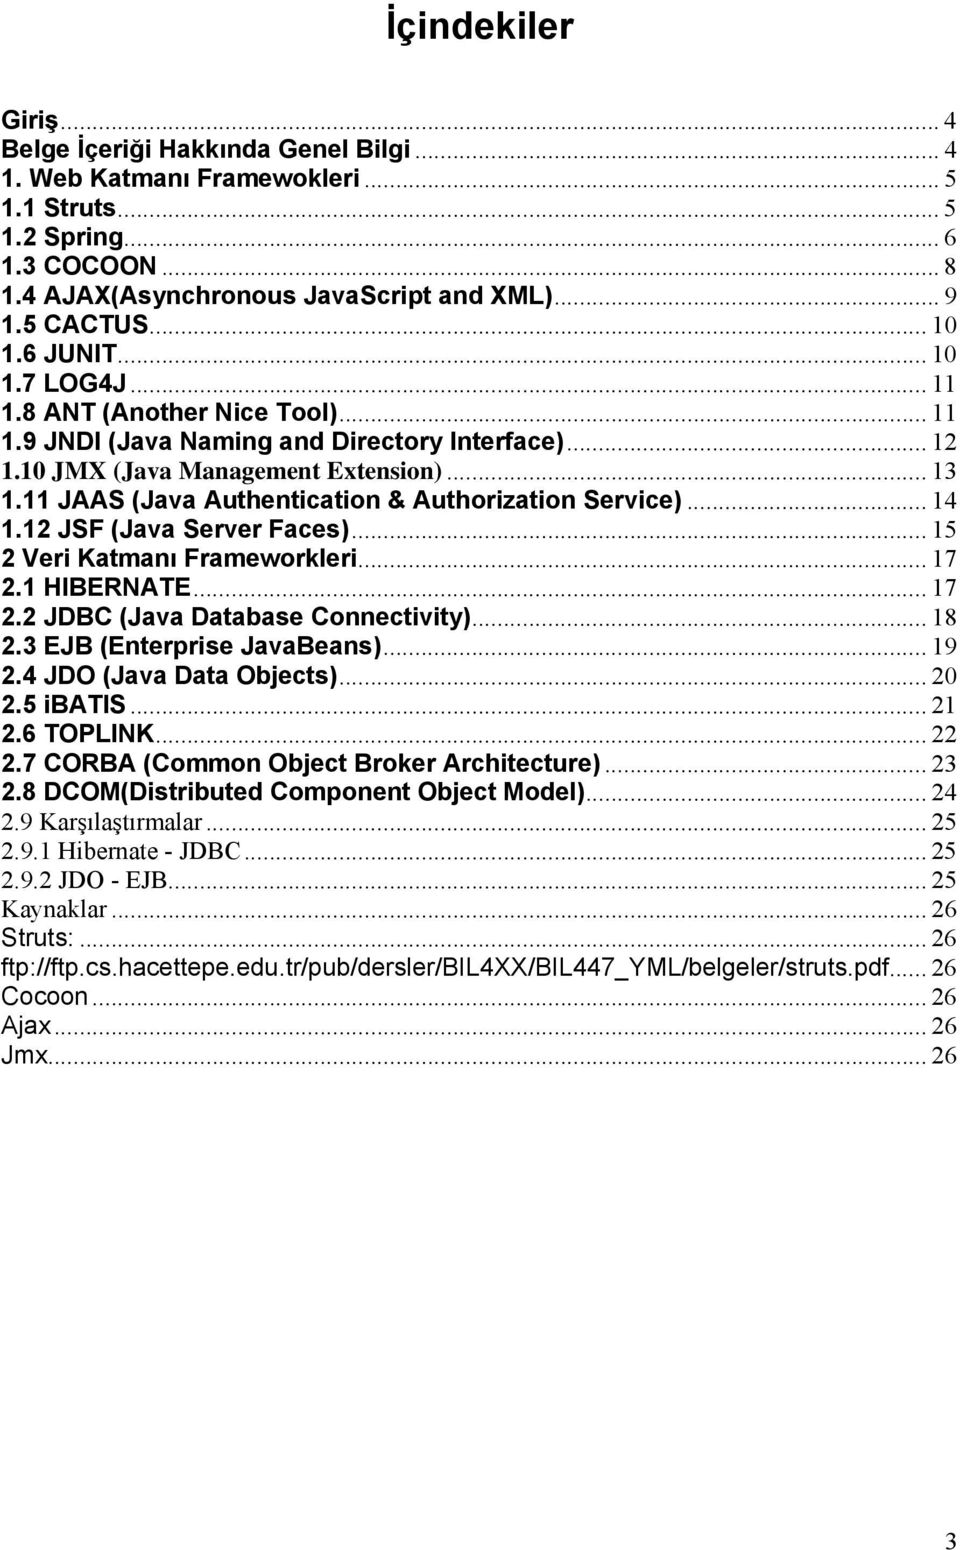 11 JAAS (Java Authentication & Authorization Service)... 14 1.12 JSF (Java Server Faces)... 15 2 Veri Katmanı Frameworkleri... 17 2.1 HIBERNATE... 17 2.2 JDBC (Java Database Connectivity)... 18 2.